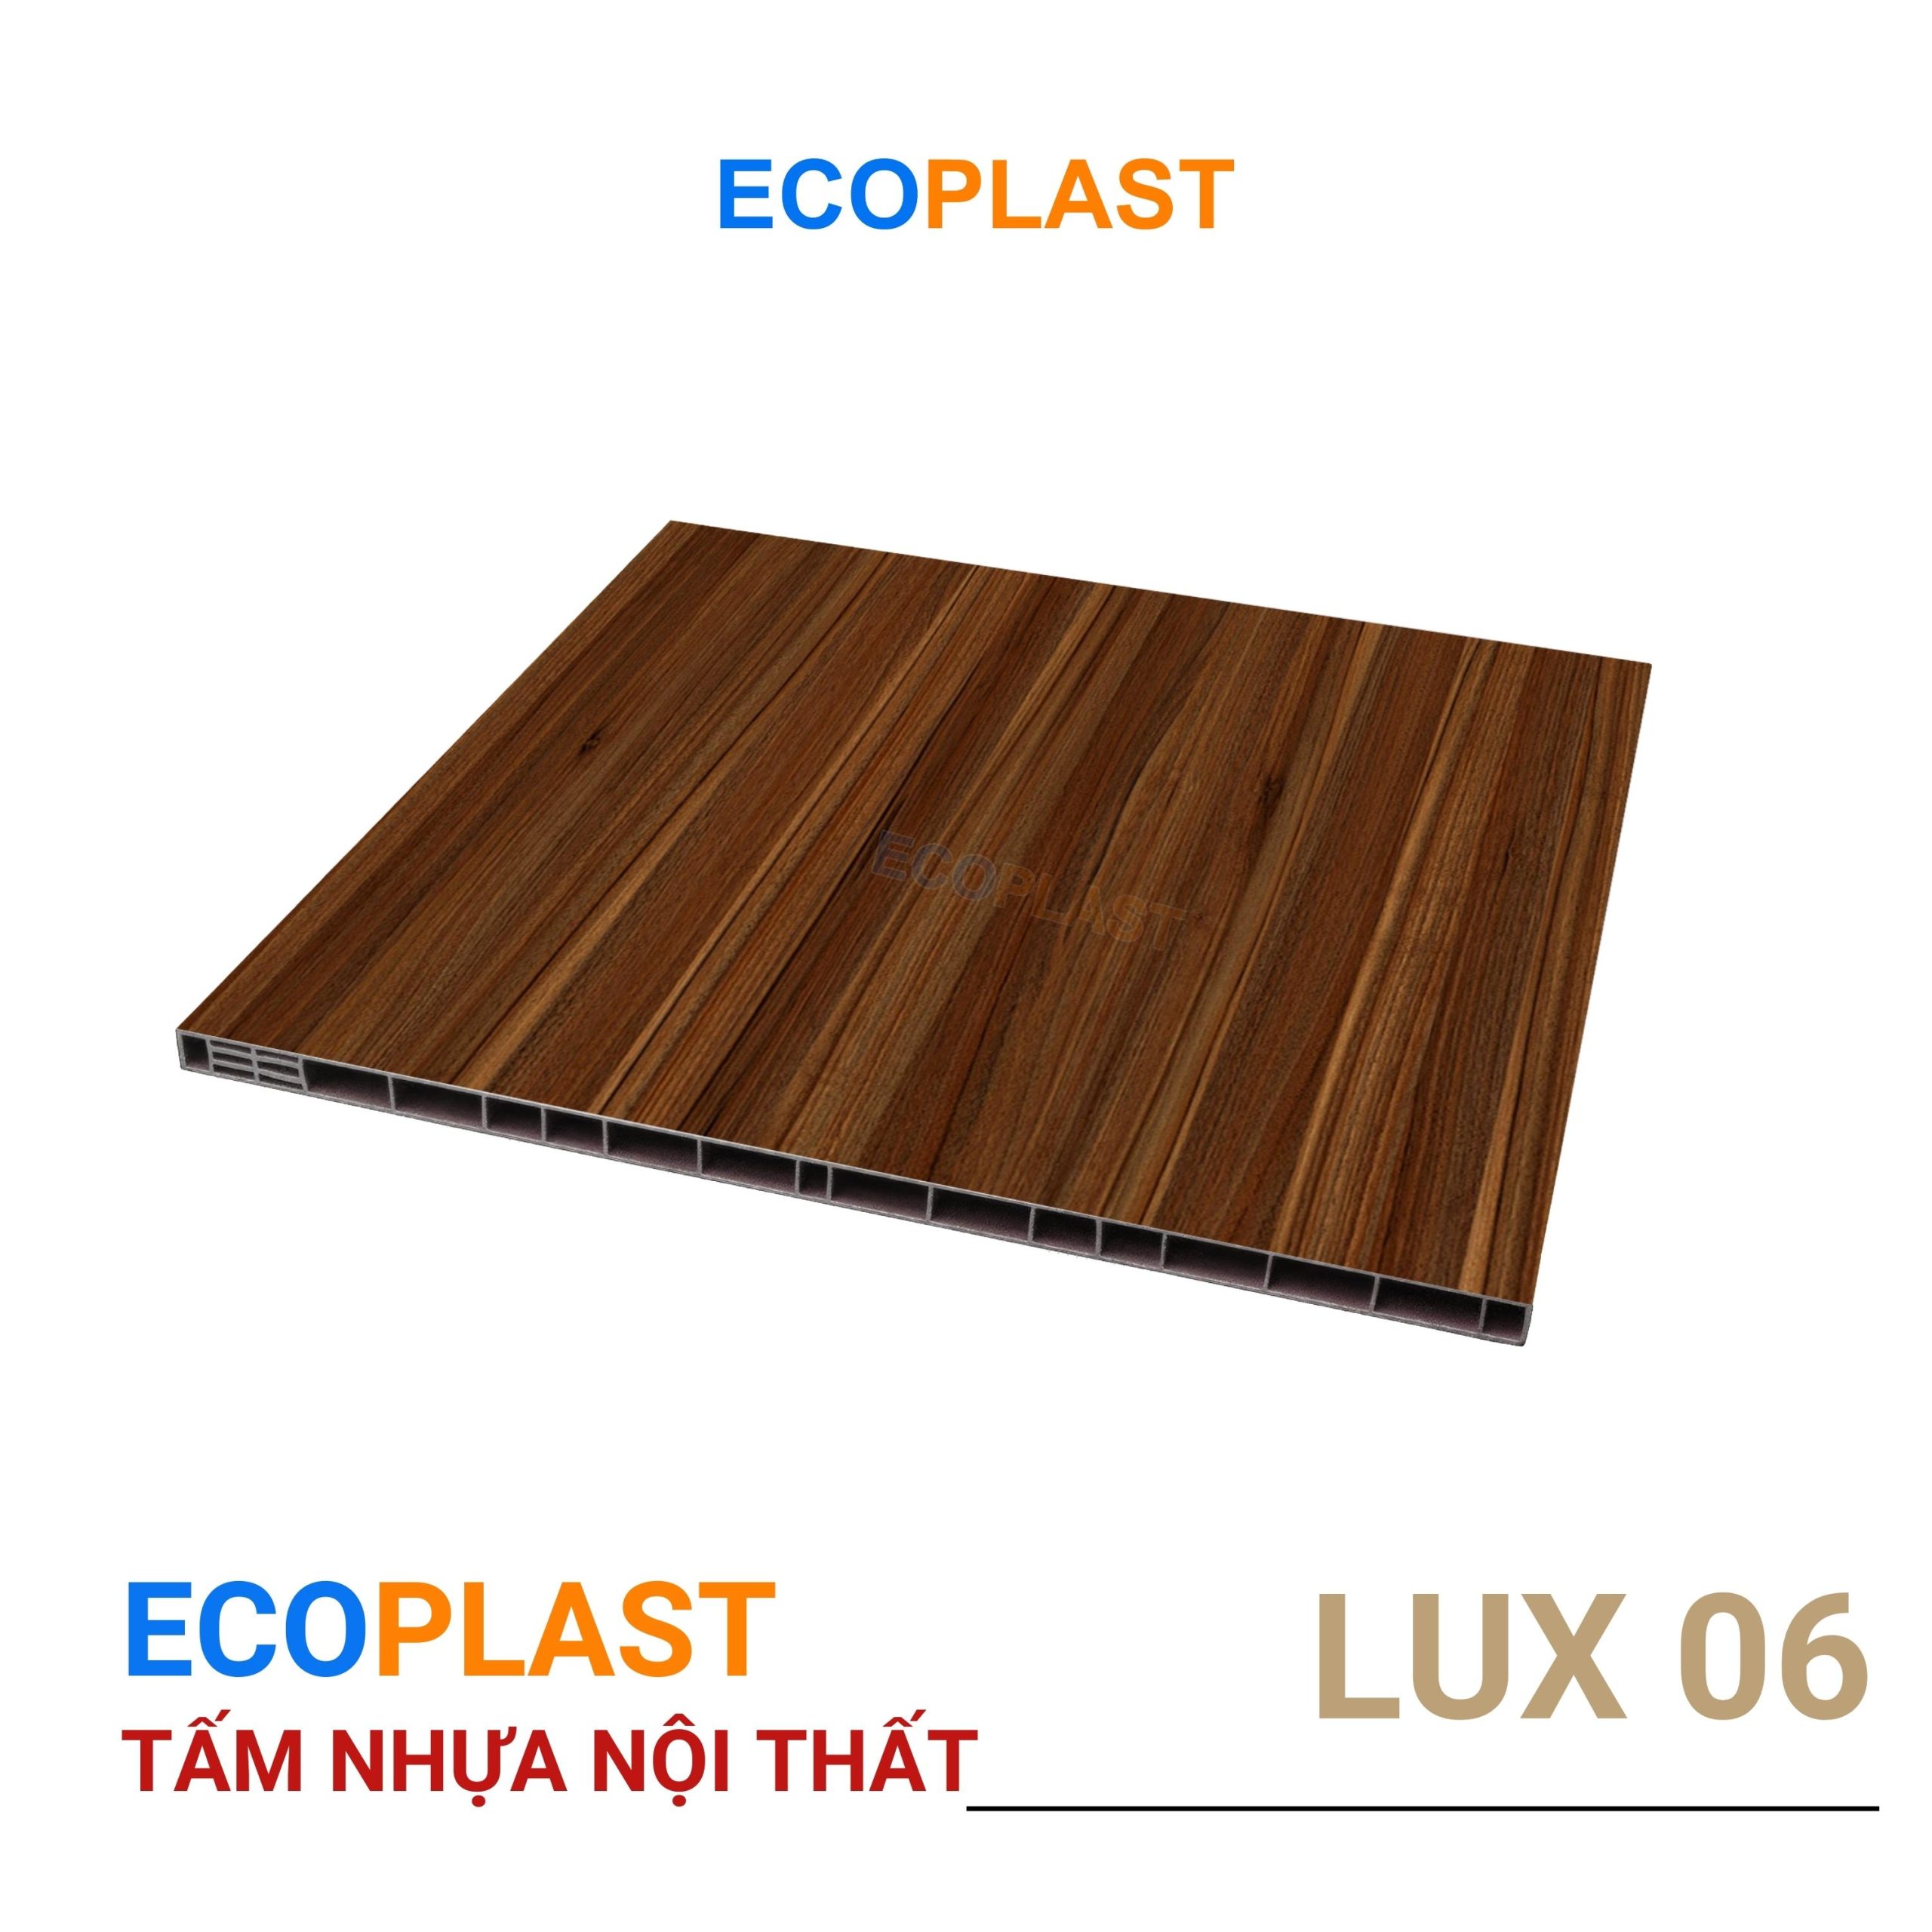 Tấm nhựa nội thất Ecoplast luxury - LUX 06